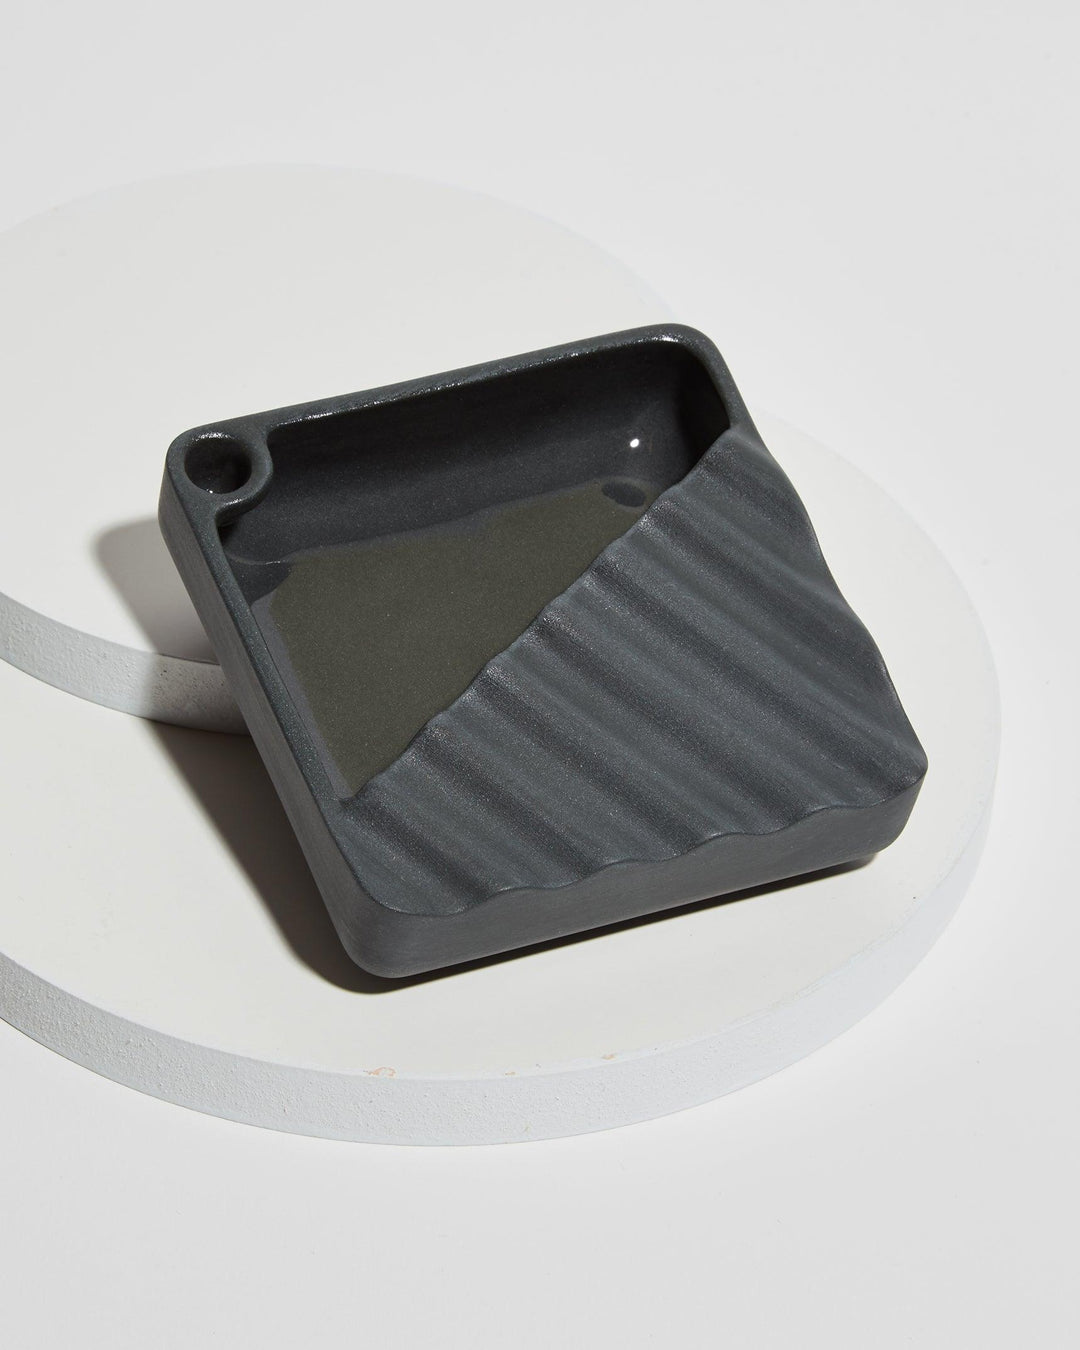 Ceramic ashtray with wavy design in color black.